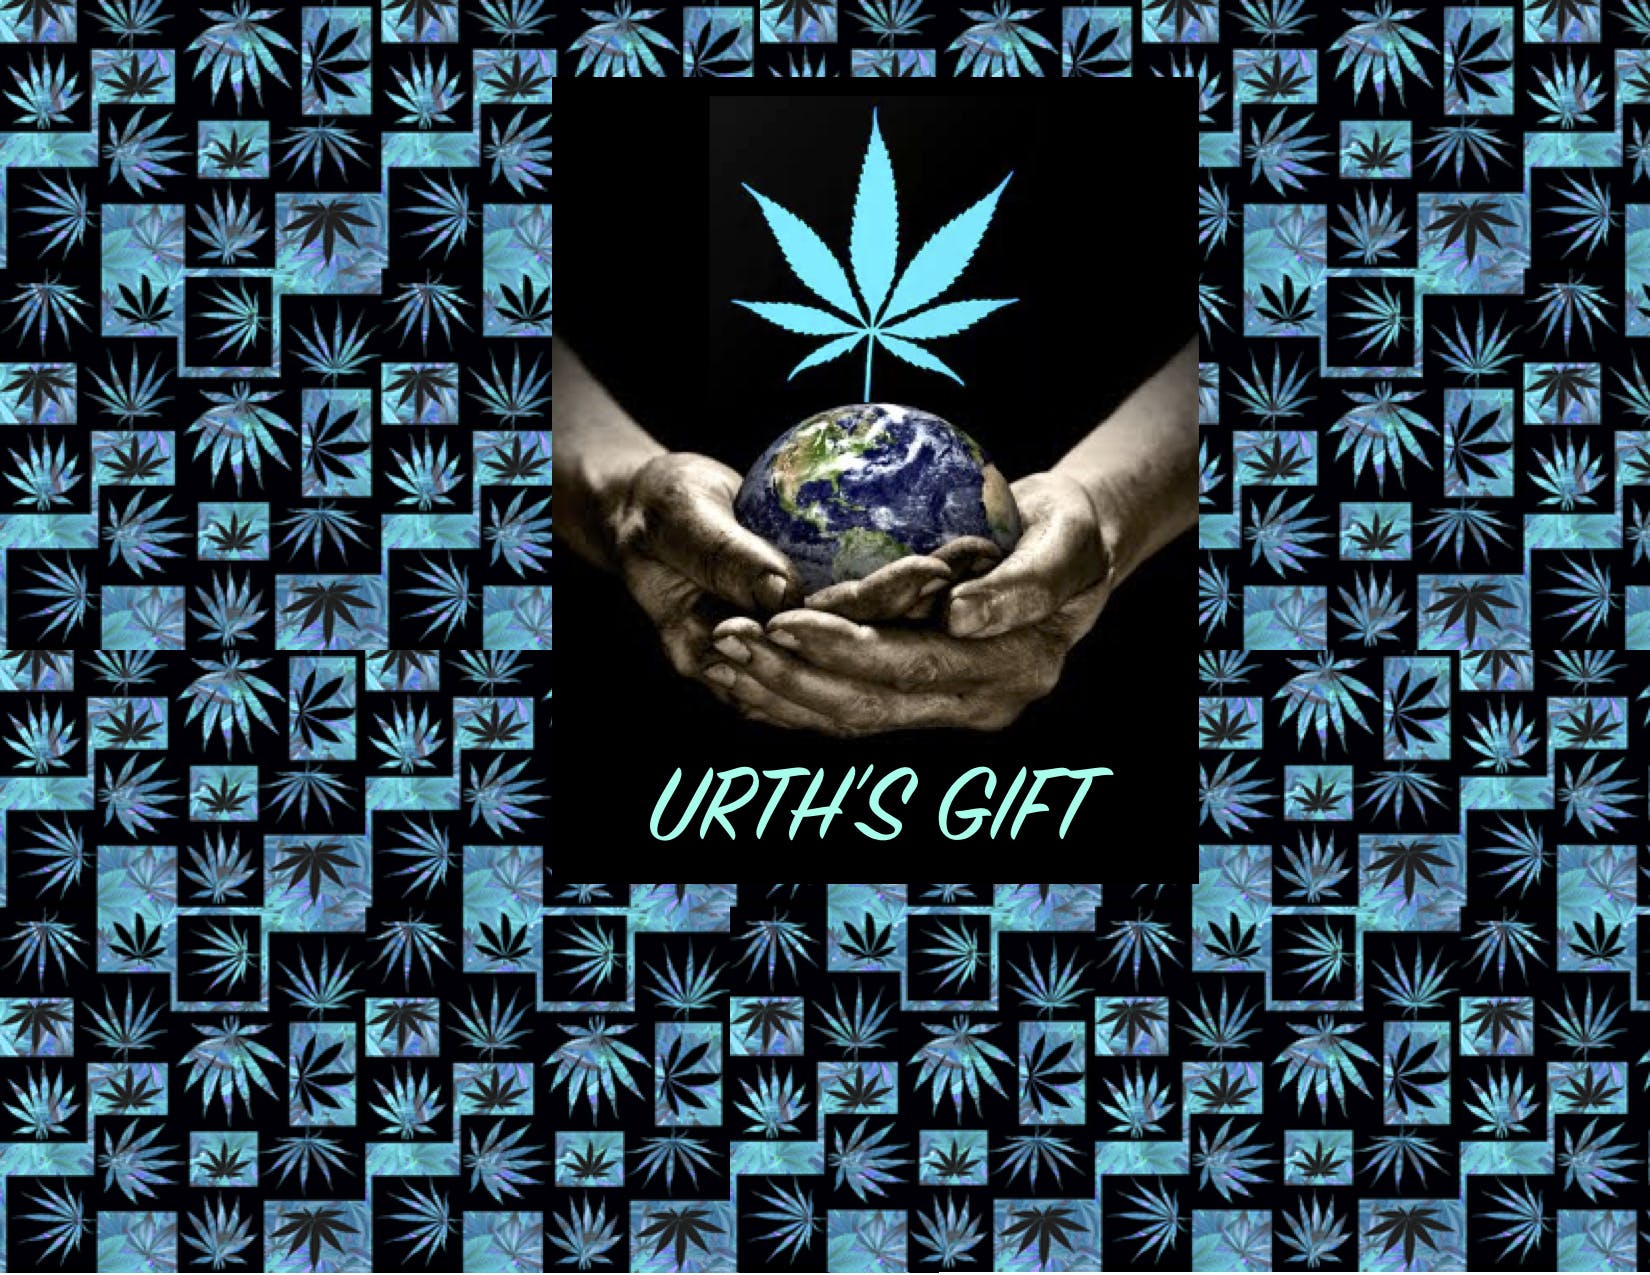 Urths Gift - Medical Marijuana Doctors - Cannabizme.com